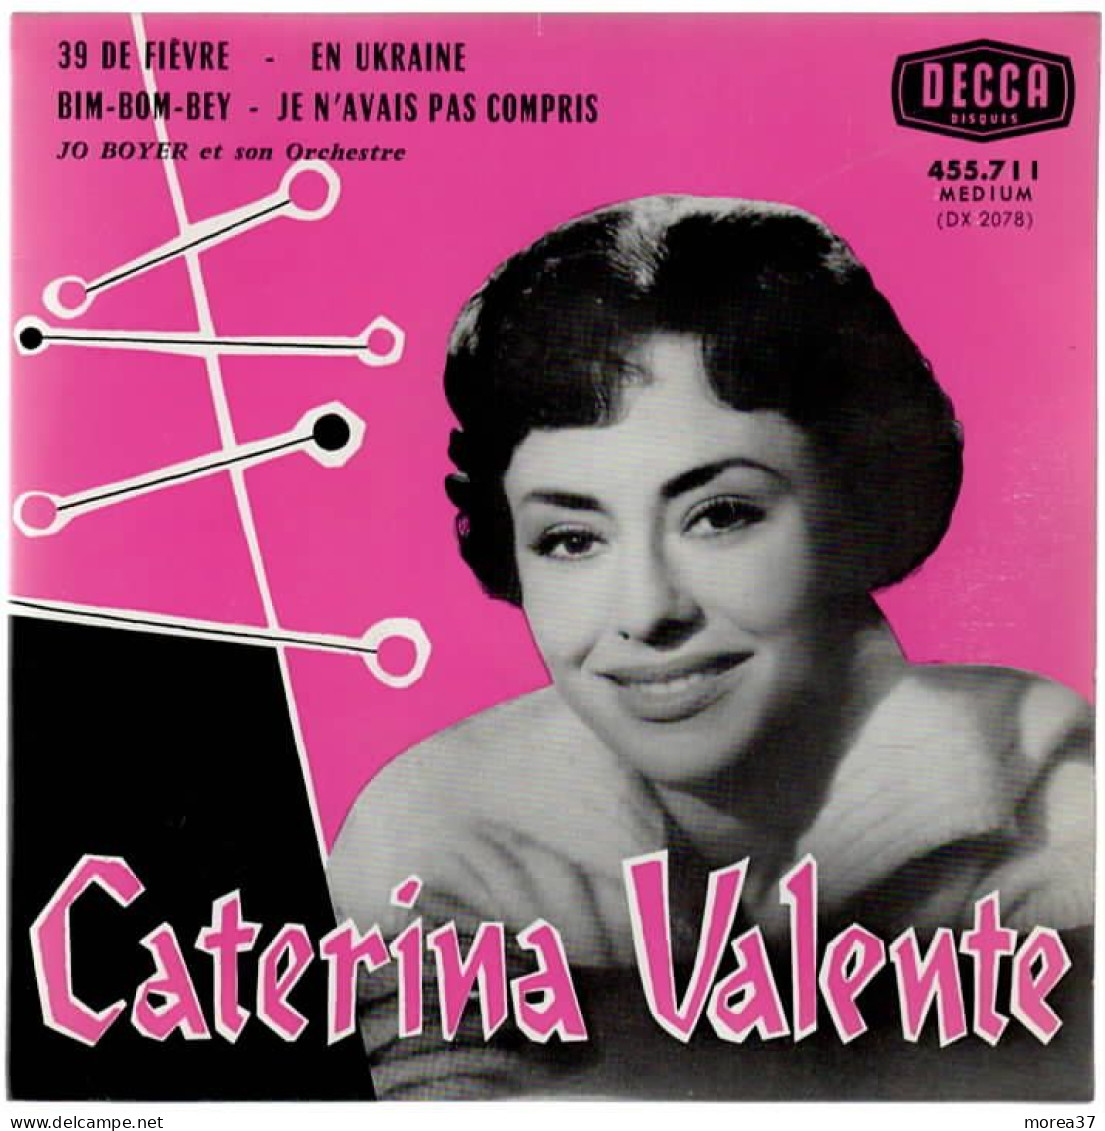 CATERINA VALENTE   39 De Fièvre   DECCA  455.711 - Other - French Music